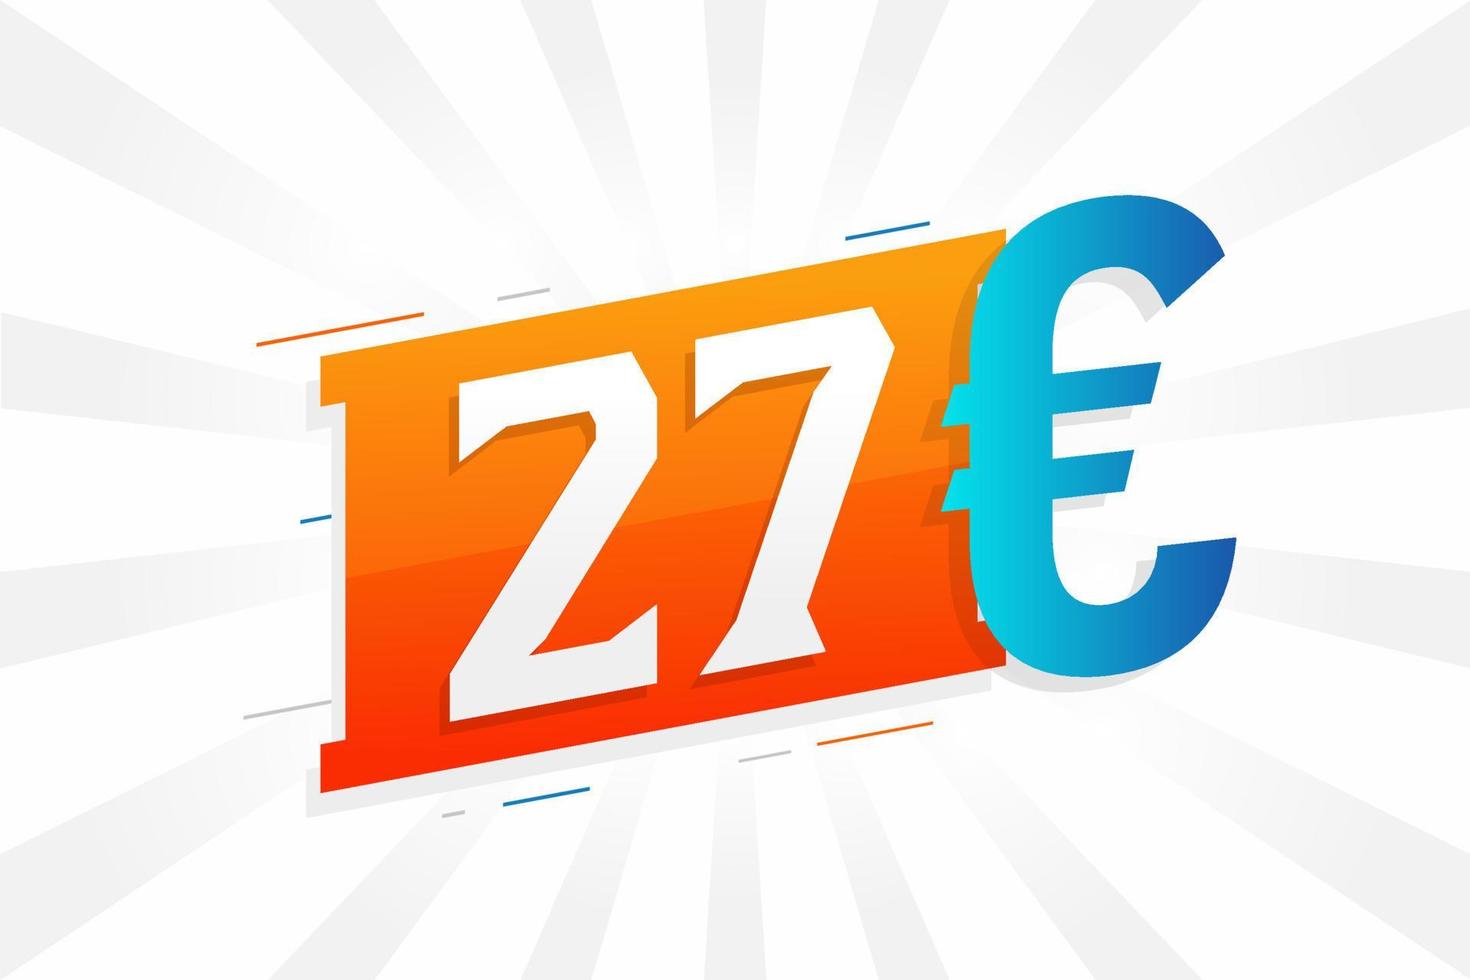 Símbolo de texto vectorial de moneda de 27 euros. Vector de stock de dinero de la unión europea de 27 euros